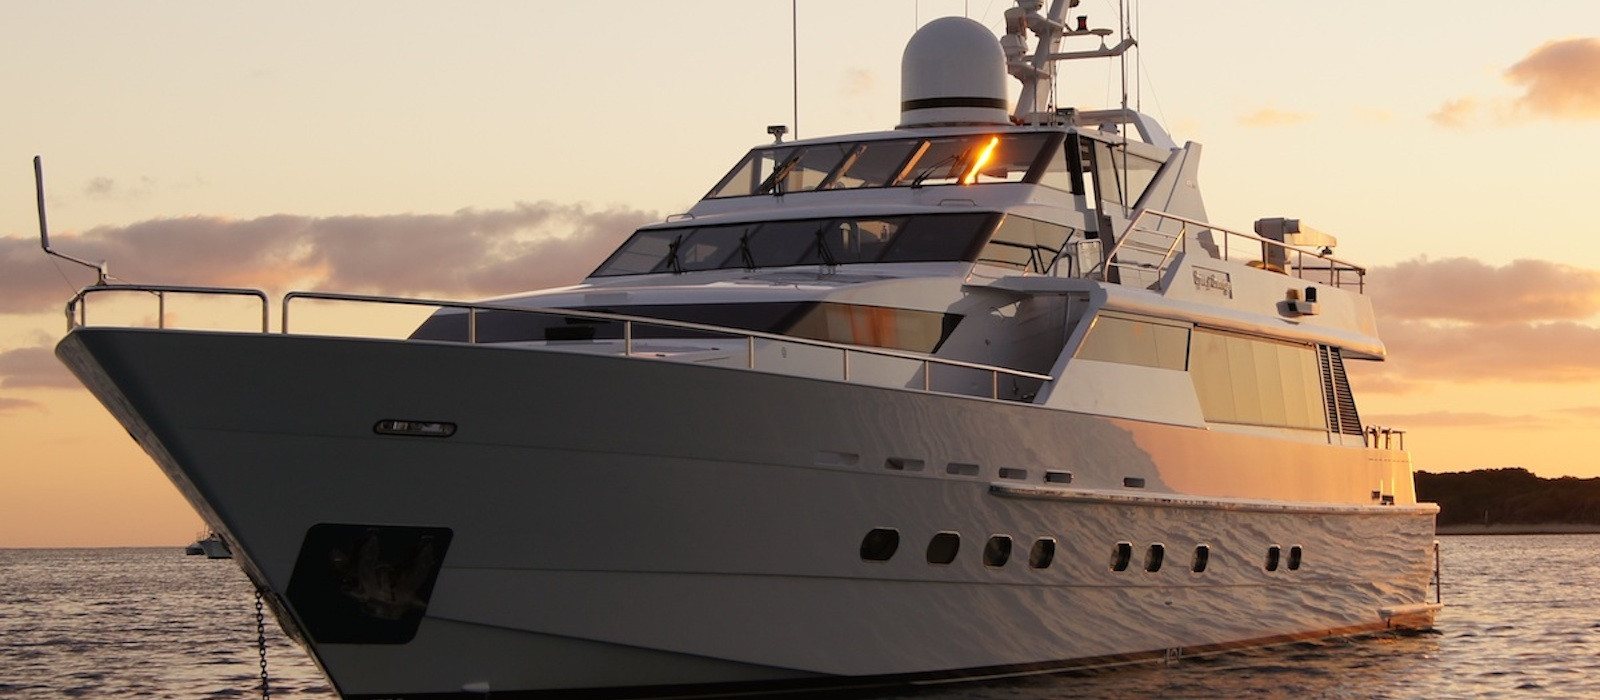 Oscar II luxury boat hire as the sun sets